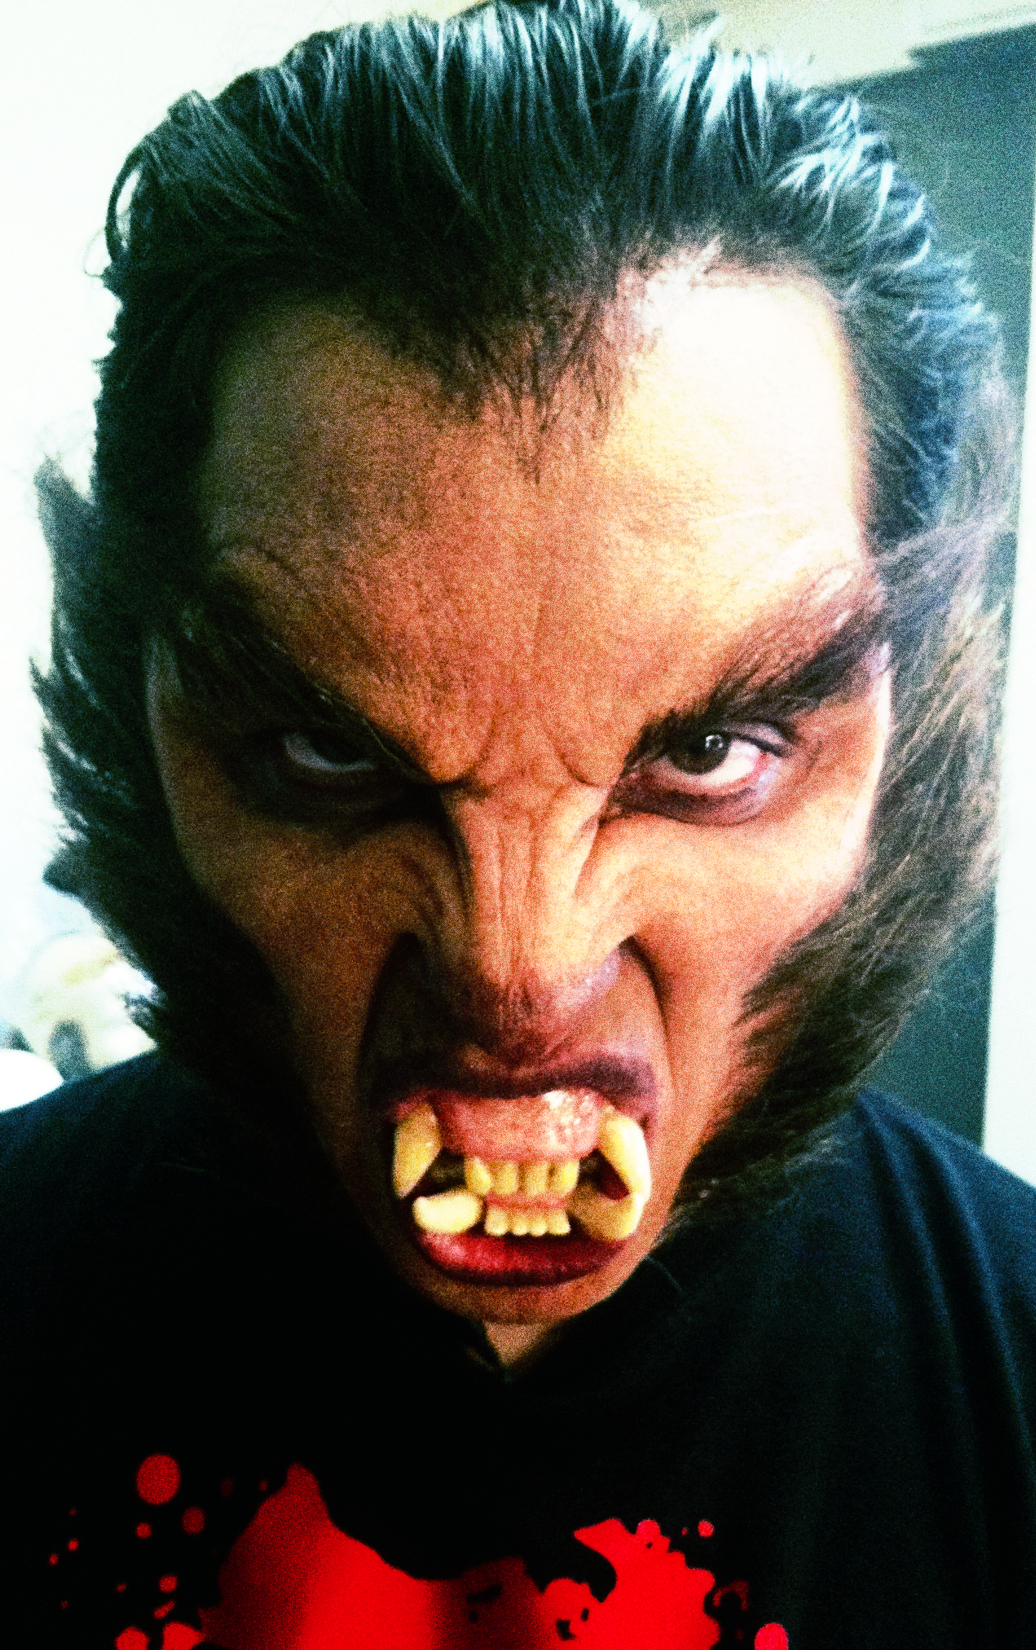 Tony E. Valenzuela in werewolf make-up by Barney Burman. (2011)